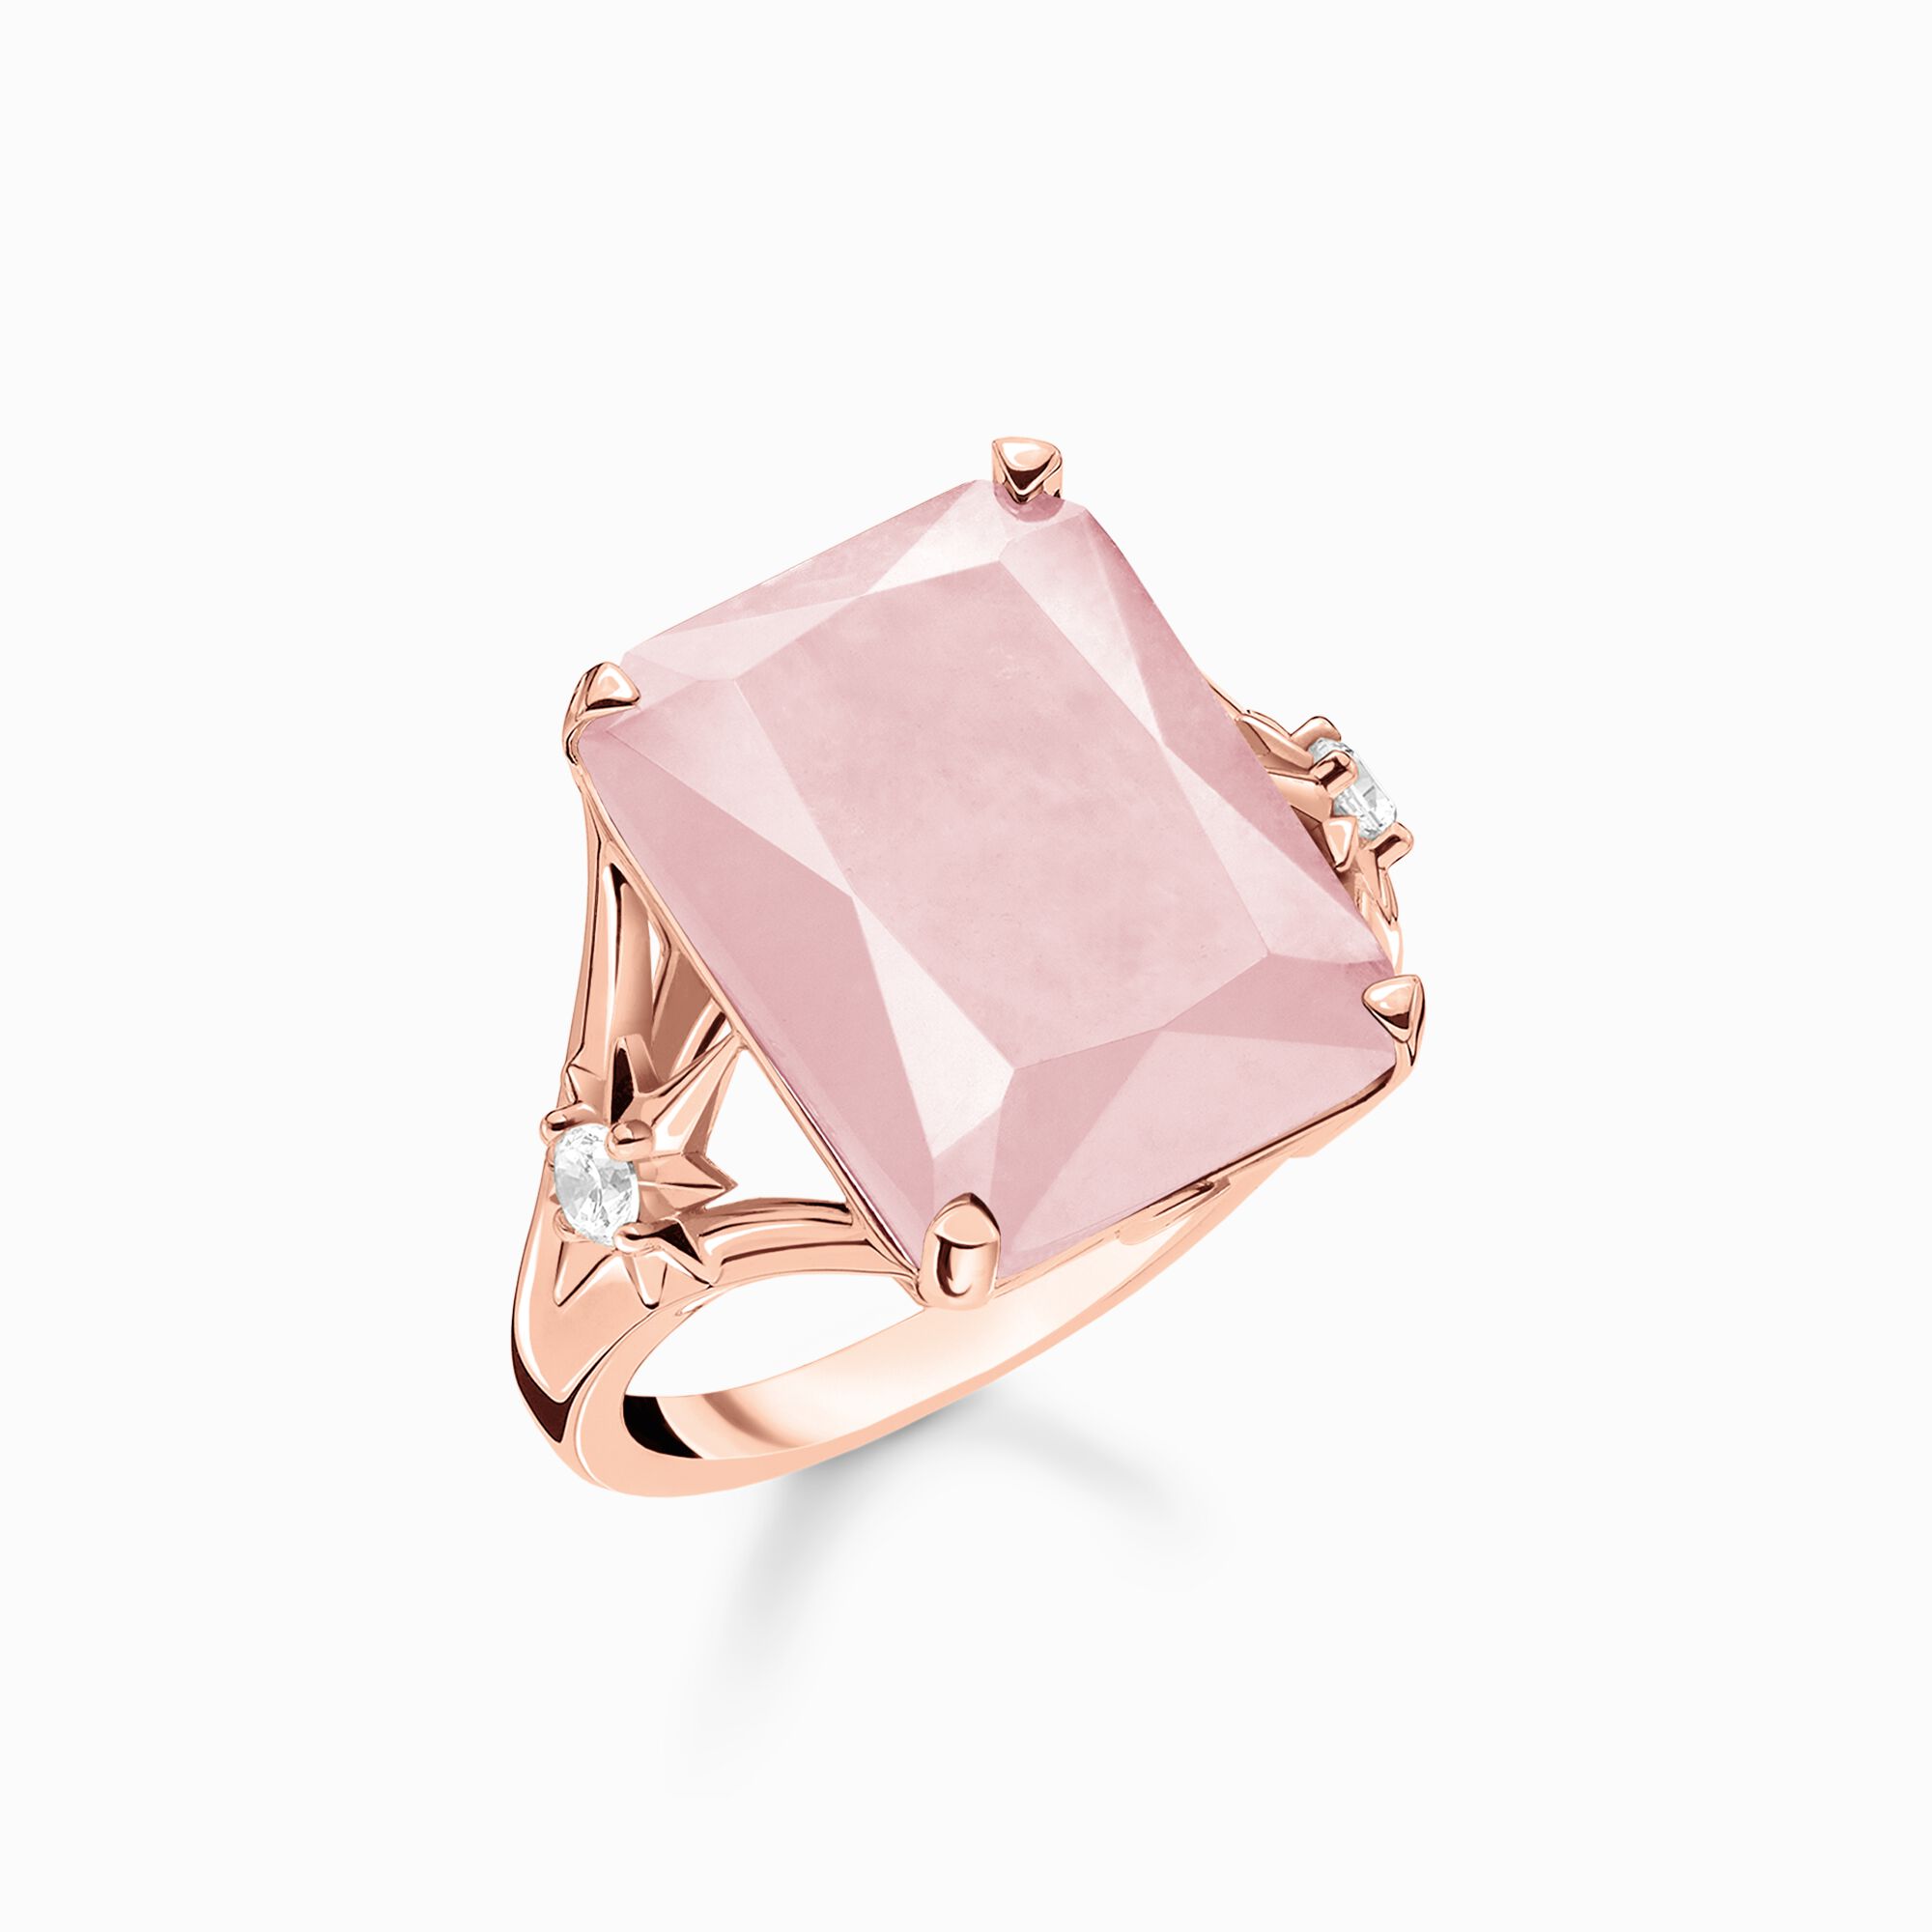 Rekwisieten Lunch Uitbreiden Ring Large Pink Stone with Star for women – THOMAS SABO